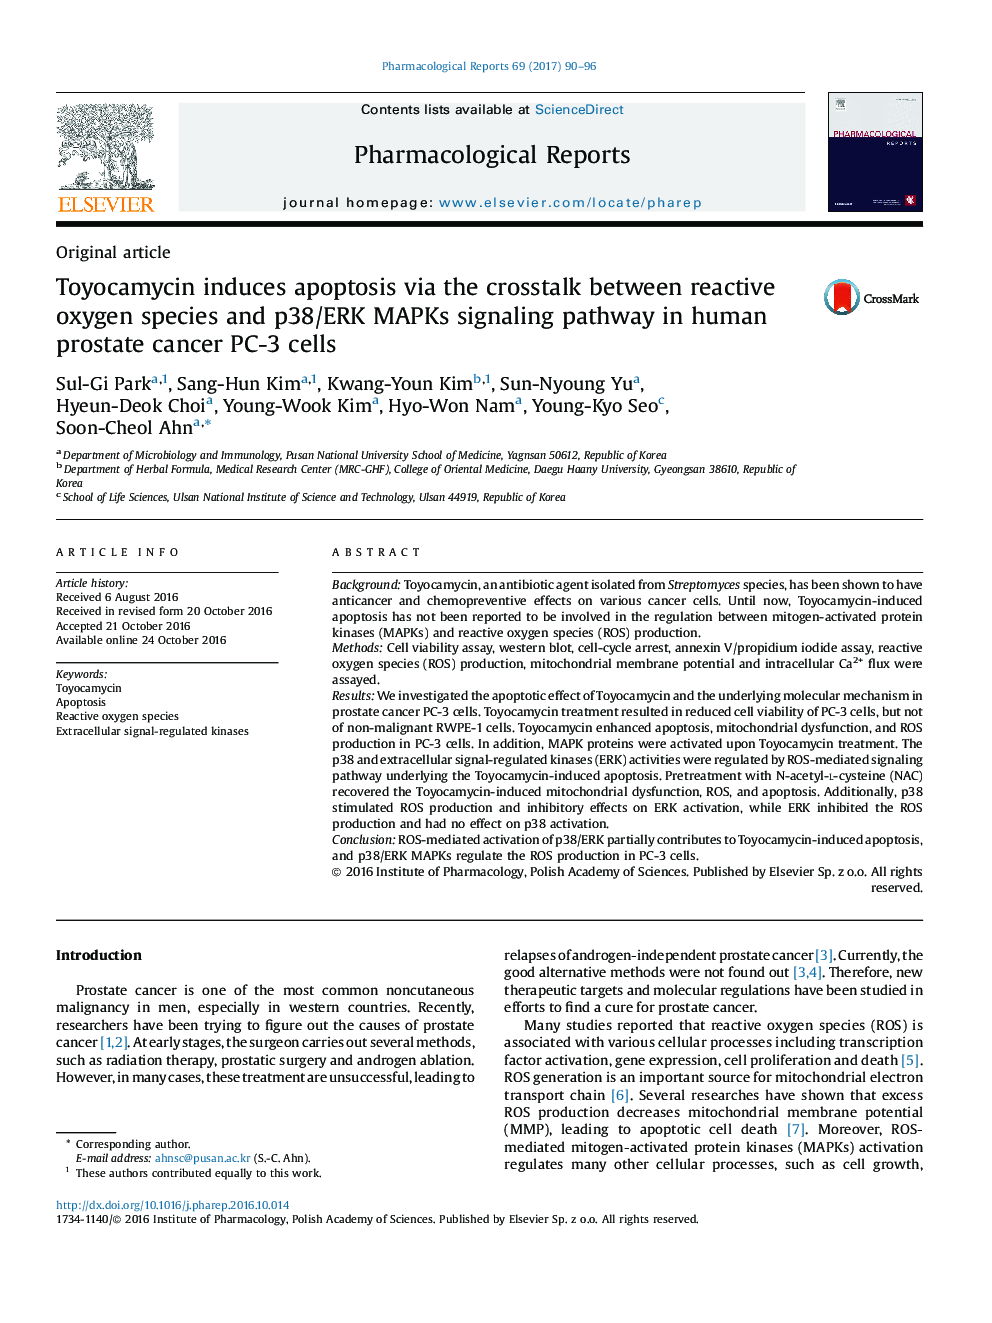 Original articleToyocamycin induces apoptosis via the crosstalk between reactive oxygen species and p38/ERK MAPKs signaling pathway in human prostate cancer PC-3 cells